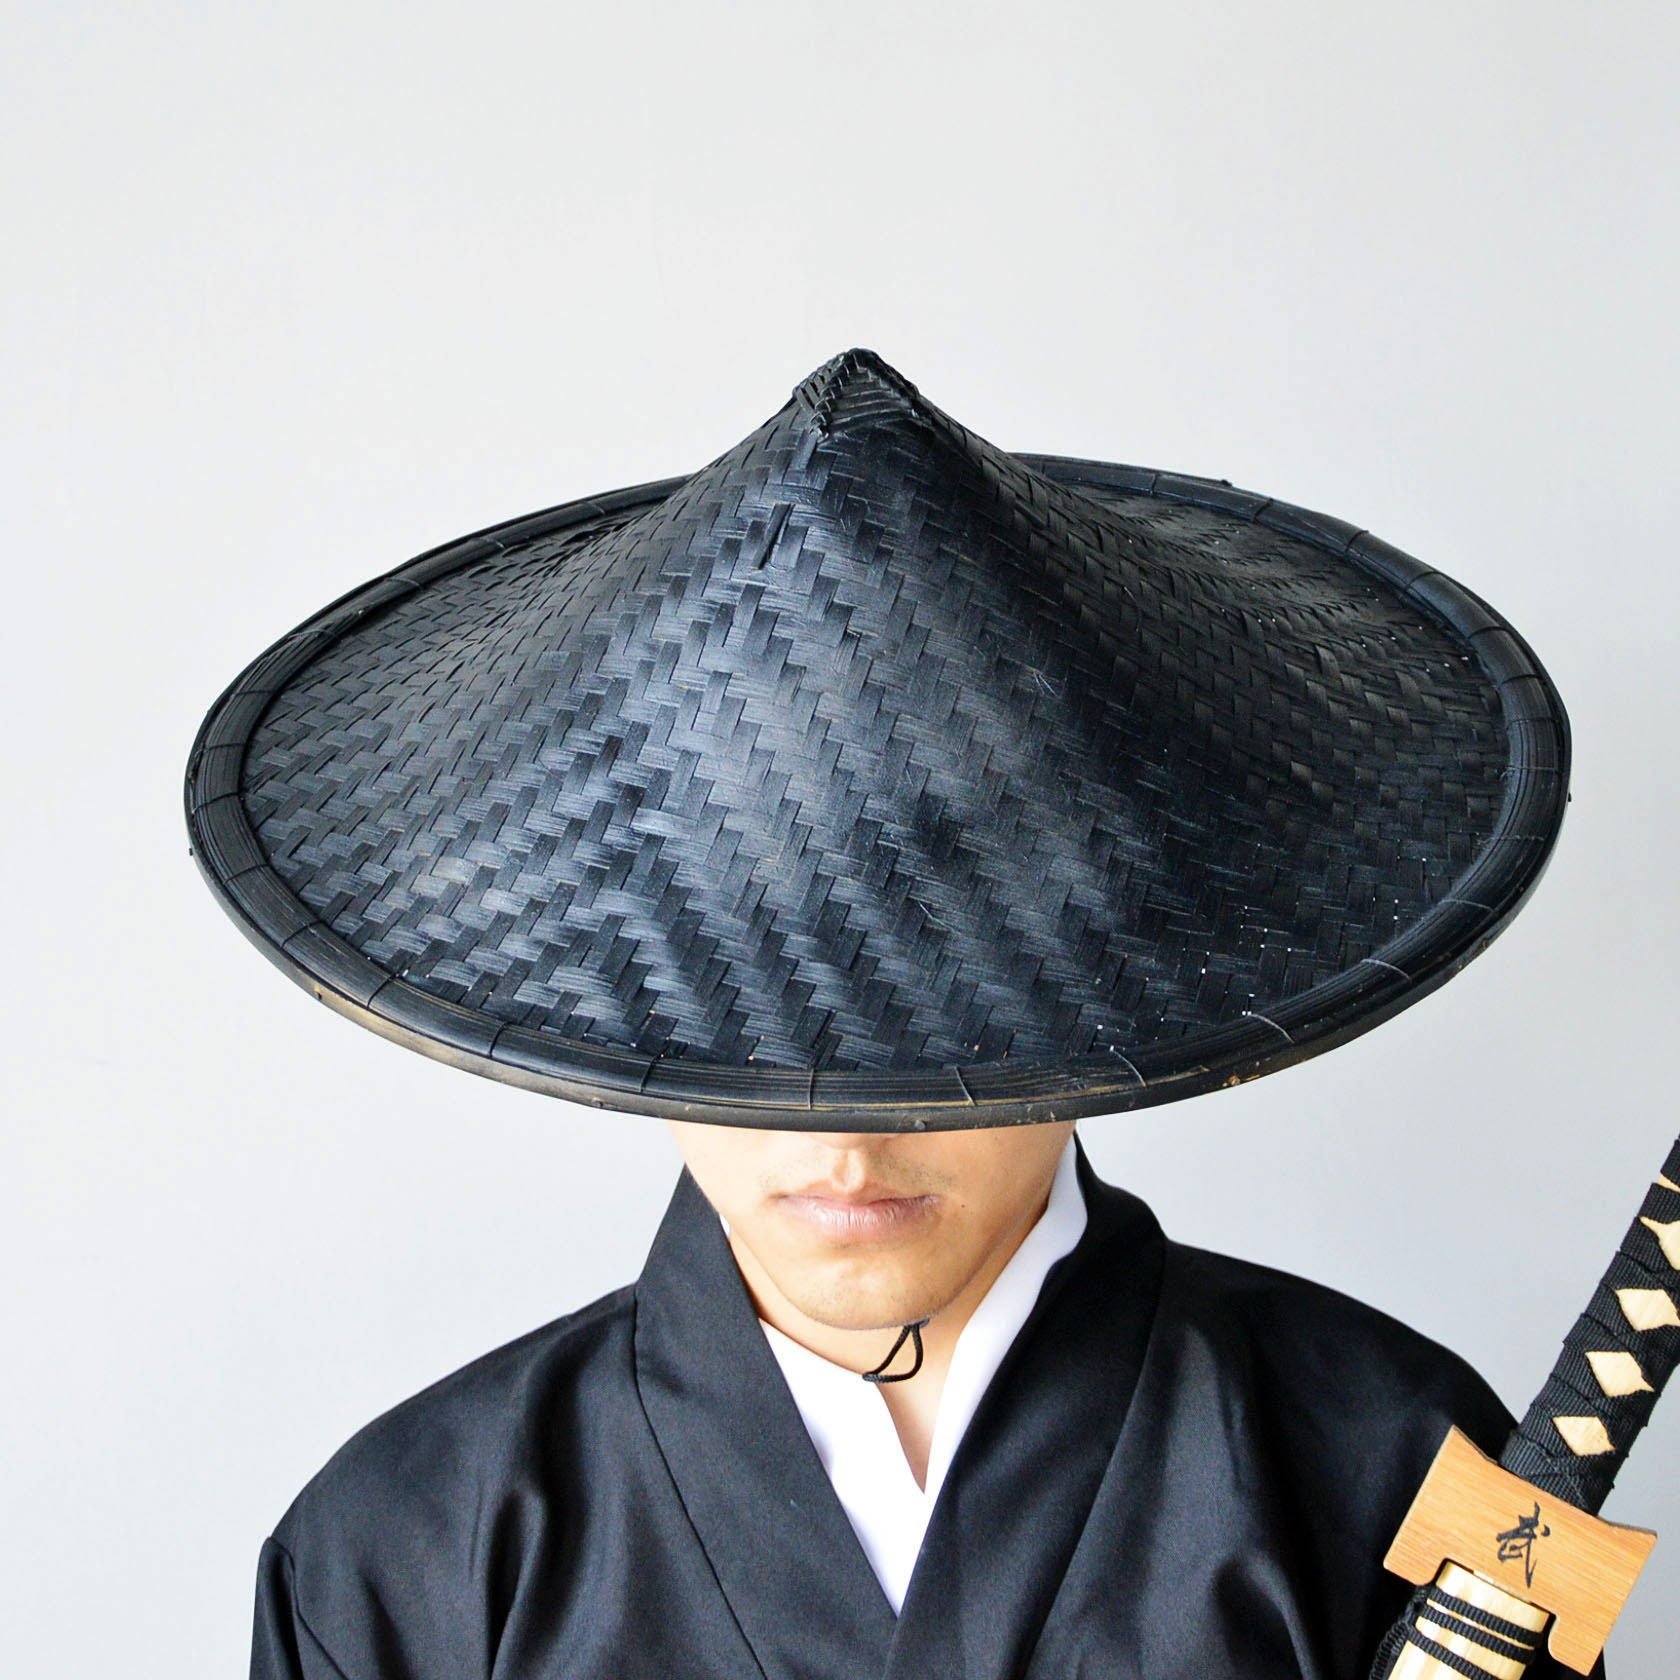 Bamboo hat. Японская шляпа амигаса. Японская шляпа амигаса Самурай. Шляпа амигаса бамбуковая. Амигаса Ронин.